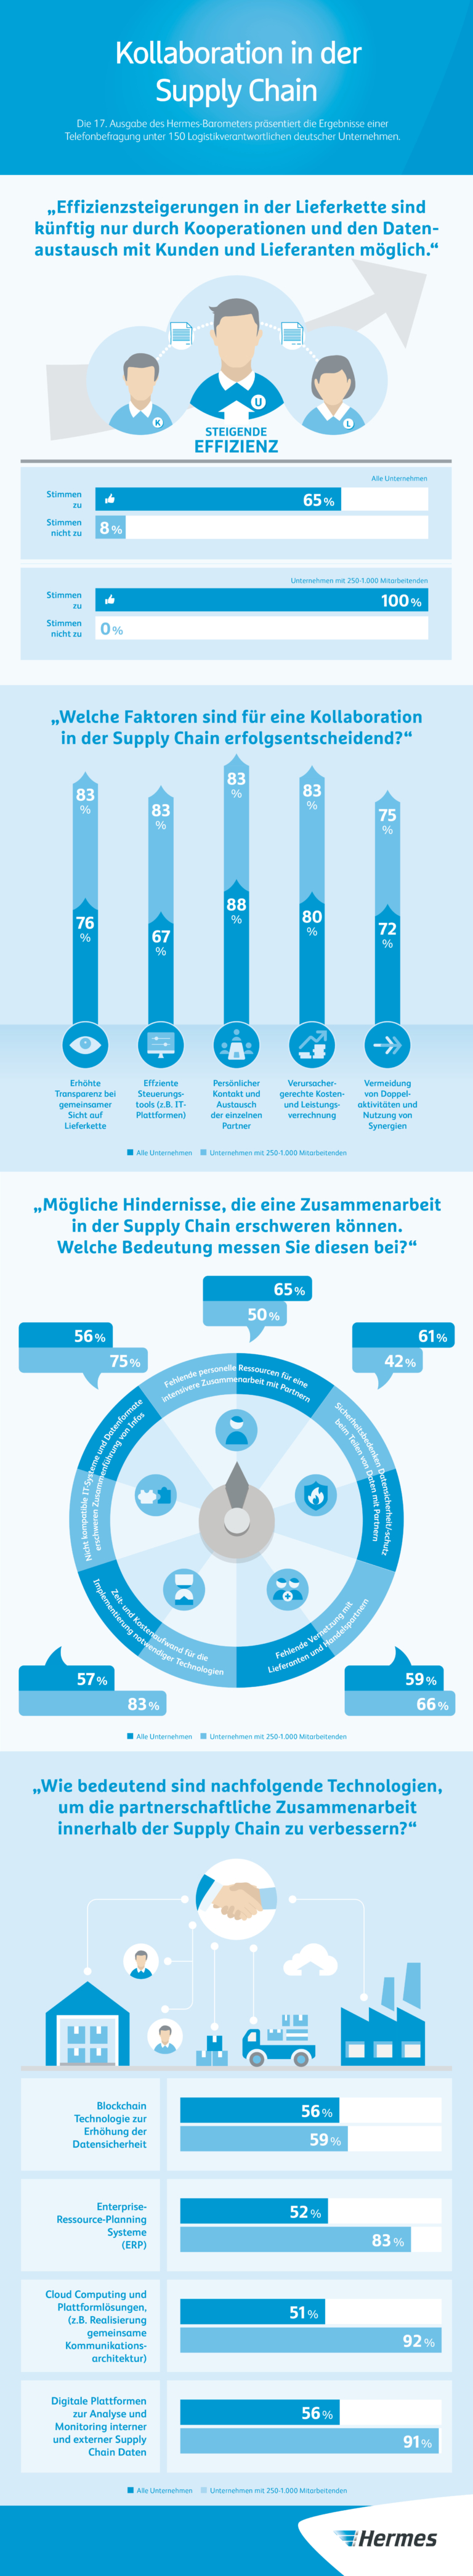 Infografik: 17. Hermes-Barometer, Kollaboration in der Supply Chain (JPG)



Hermes; Umfrage; Kollaboration